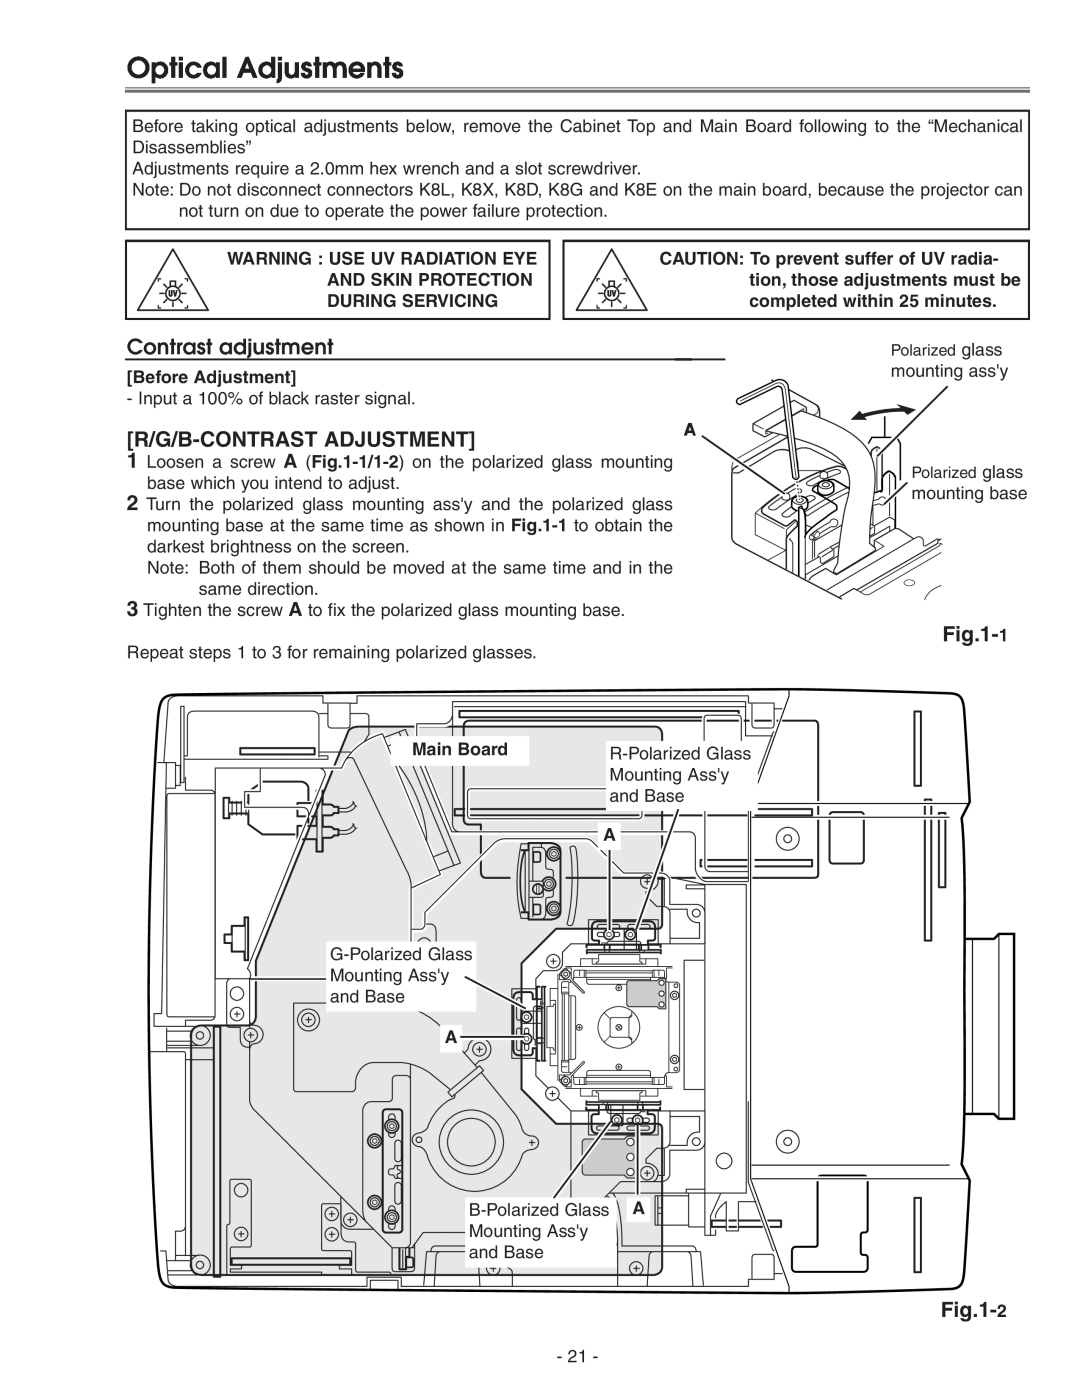 Eiki LC-X71 LC-X71L service manual Optical Adjustments, Contrast adjustment, R/G/B-Contrast Adjustment, 2 